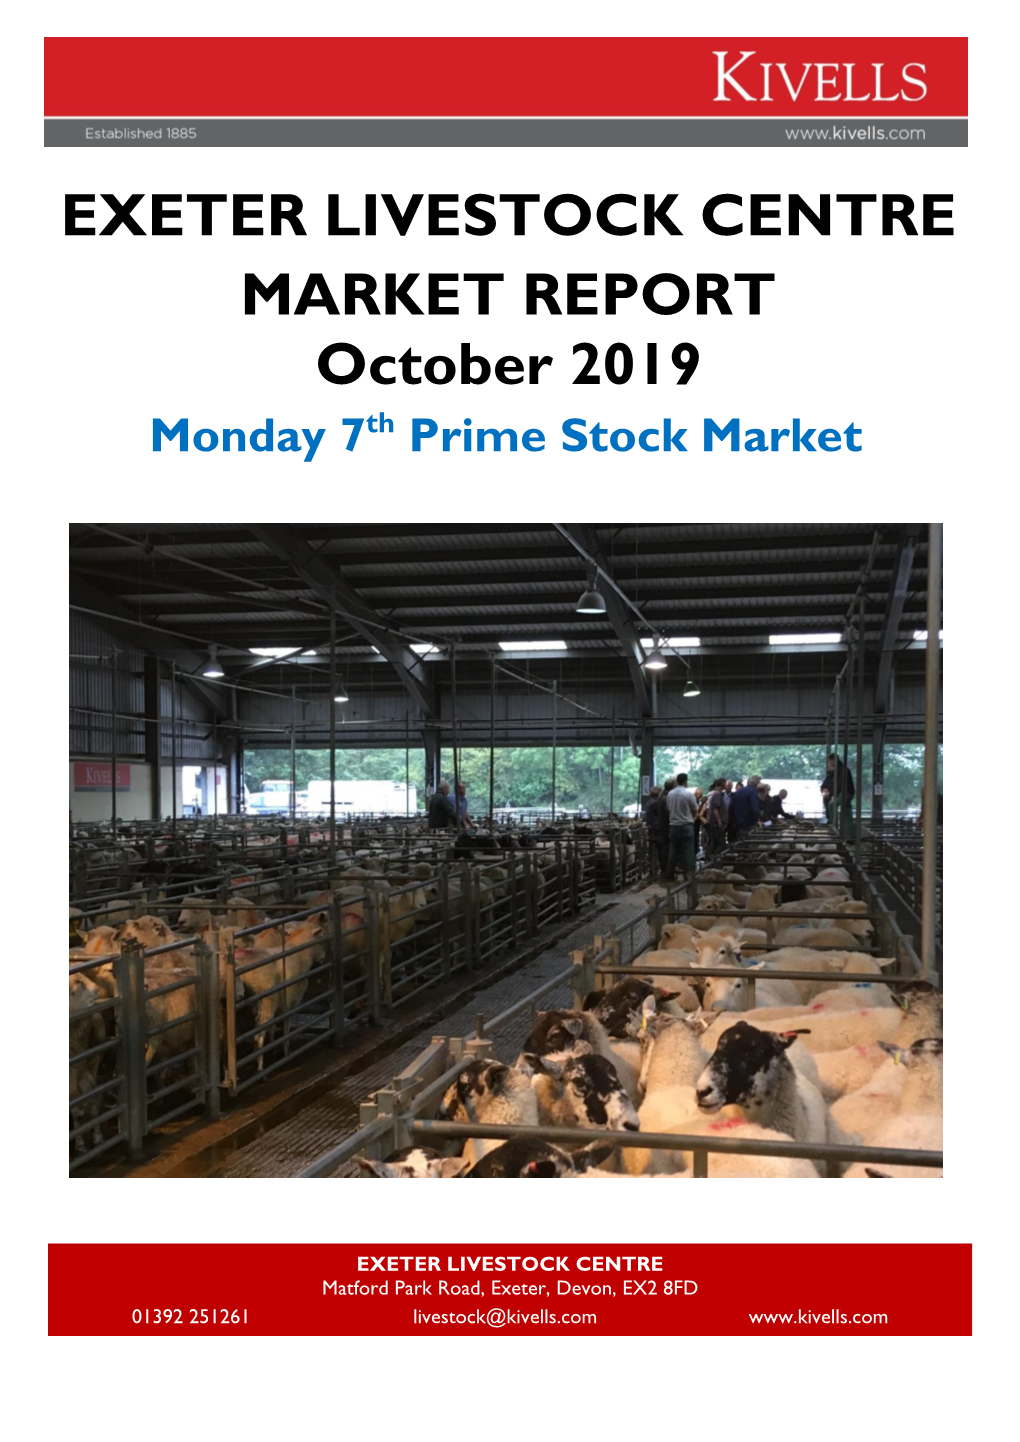 EXETER LIVESTOCK CENTRE MARKET REPORT October 2019